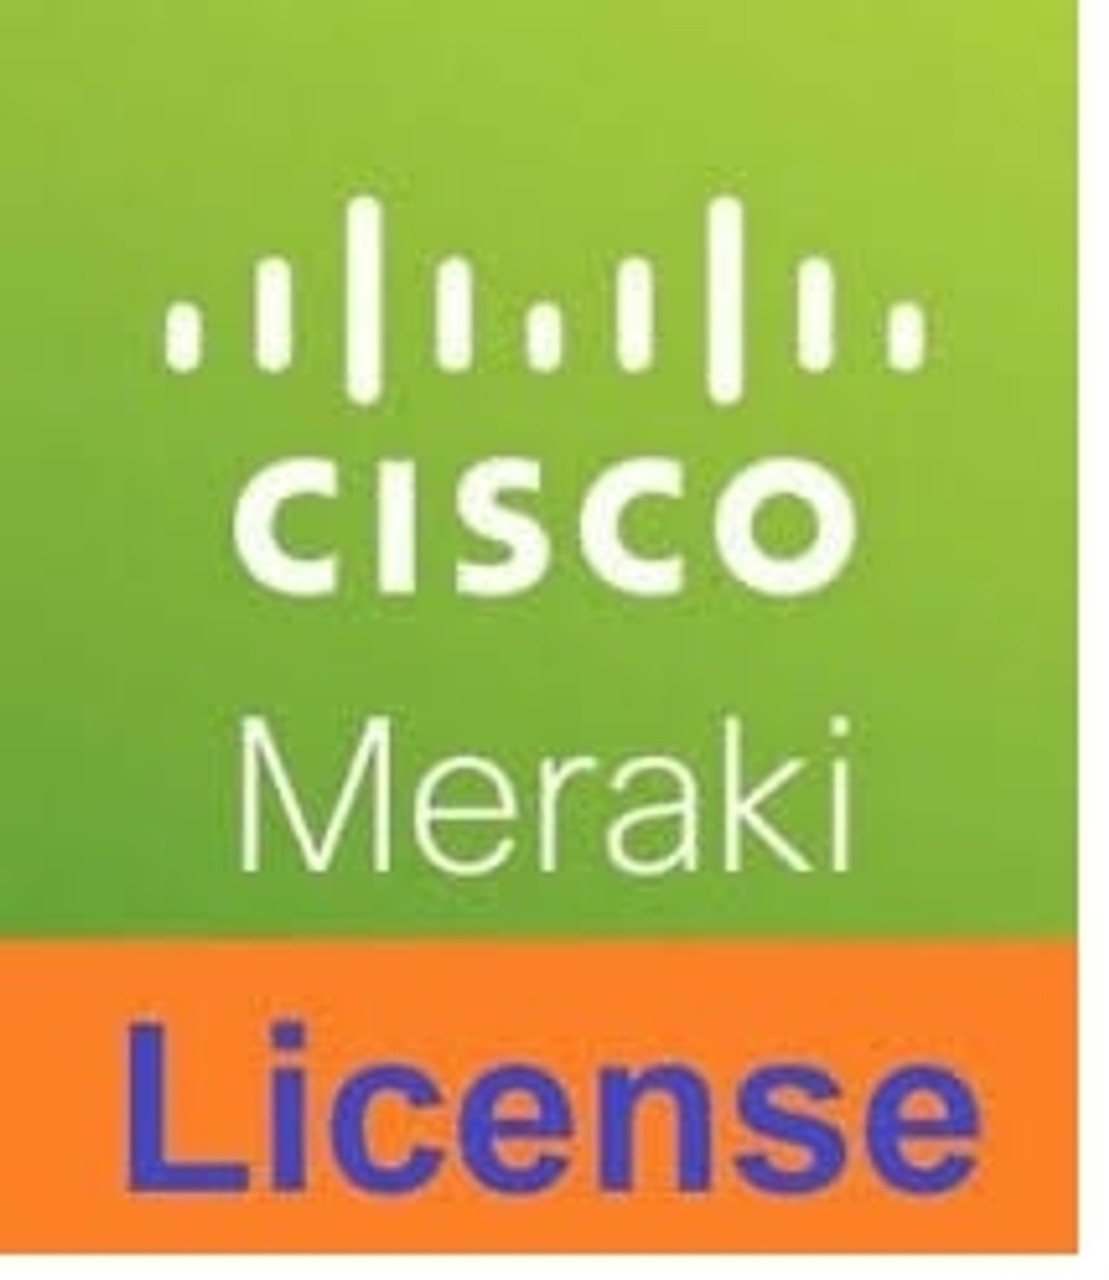 Meraki MS125-24 Enterprise License and Support, 3 Year